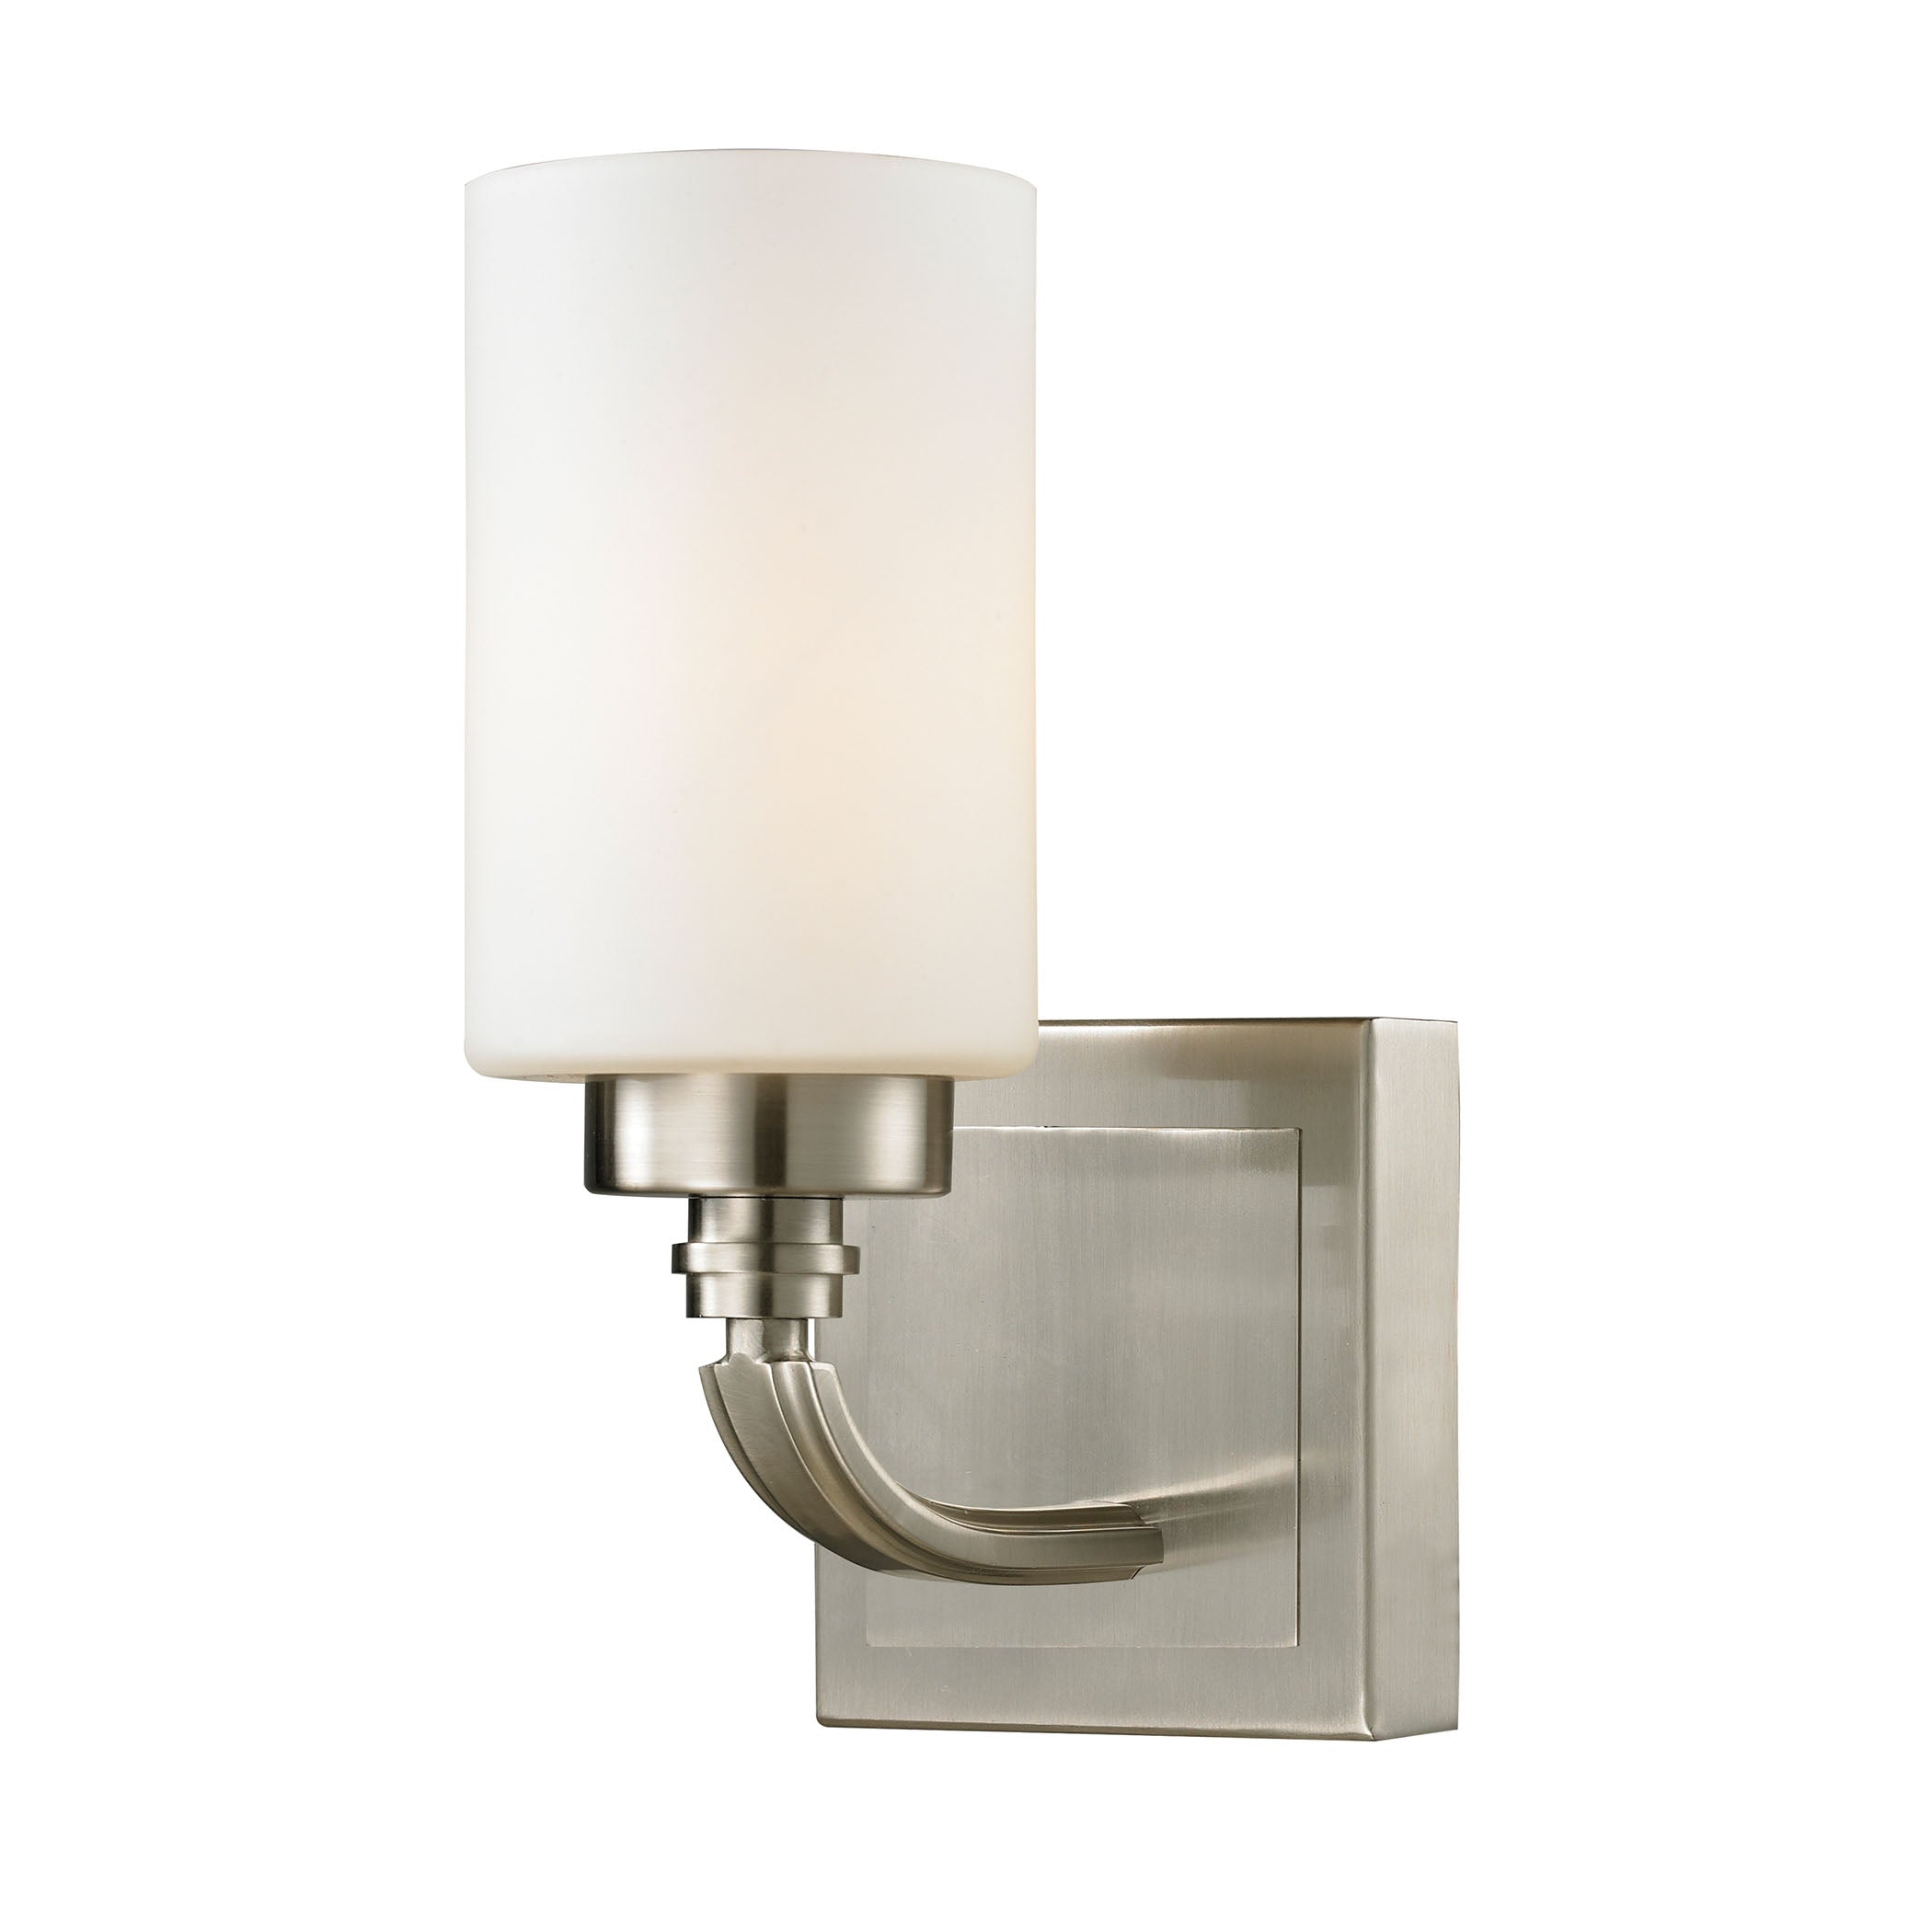 ELK Lighting 11660/1 Dawson 1-Light Vanity Lamp in Brushed Nickel with White Glass